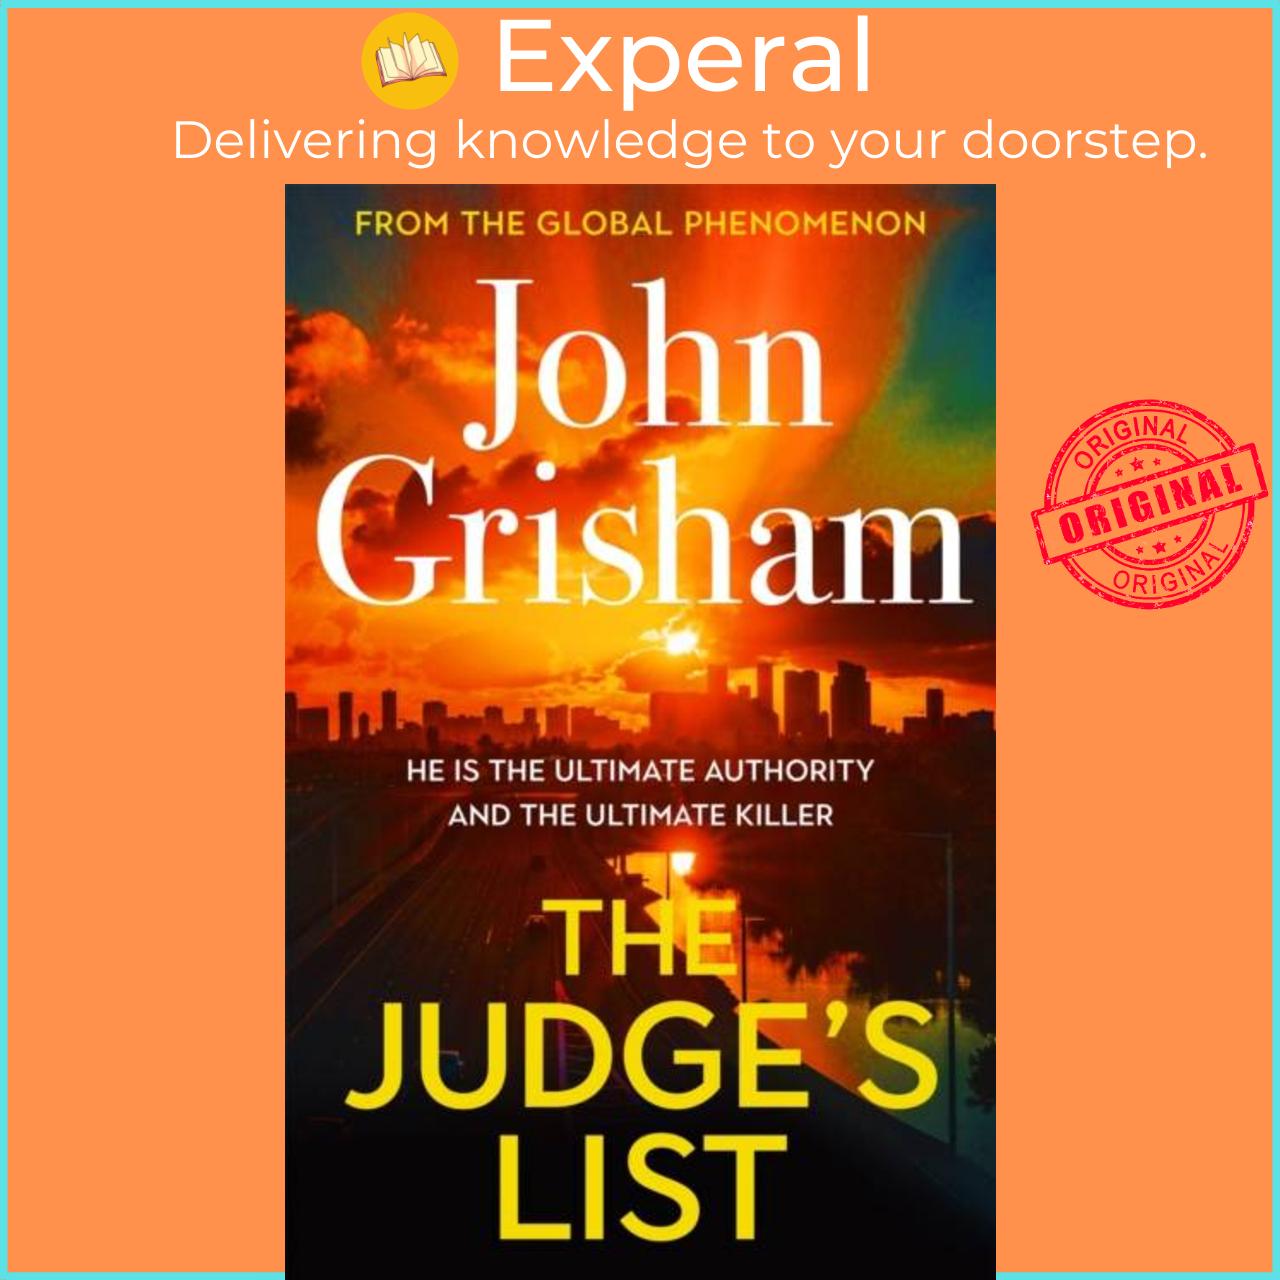 Sách - The Judge's List - John Grisham's latest breathtaking bestseller by John Grisham (UK edition, hardcover)